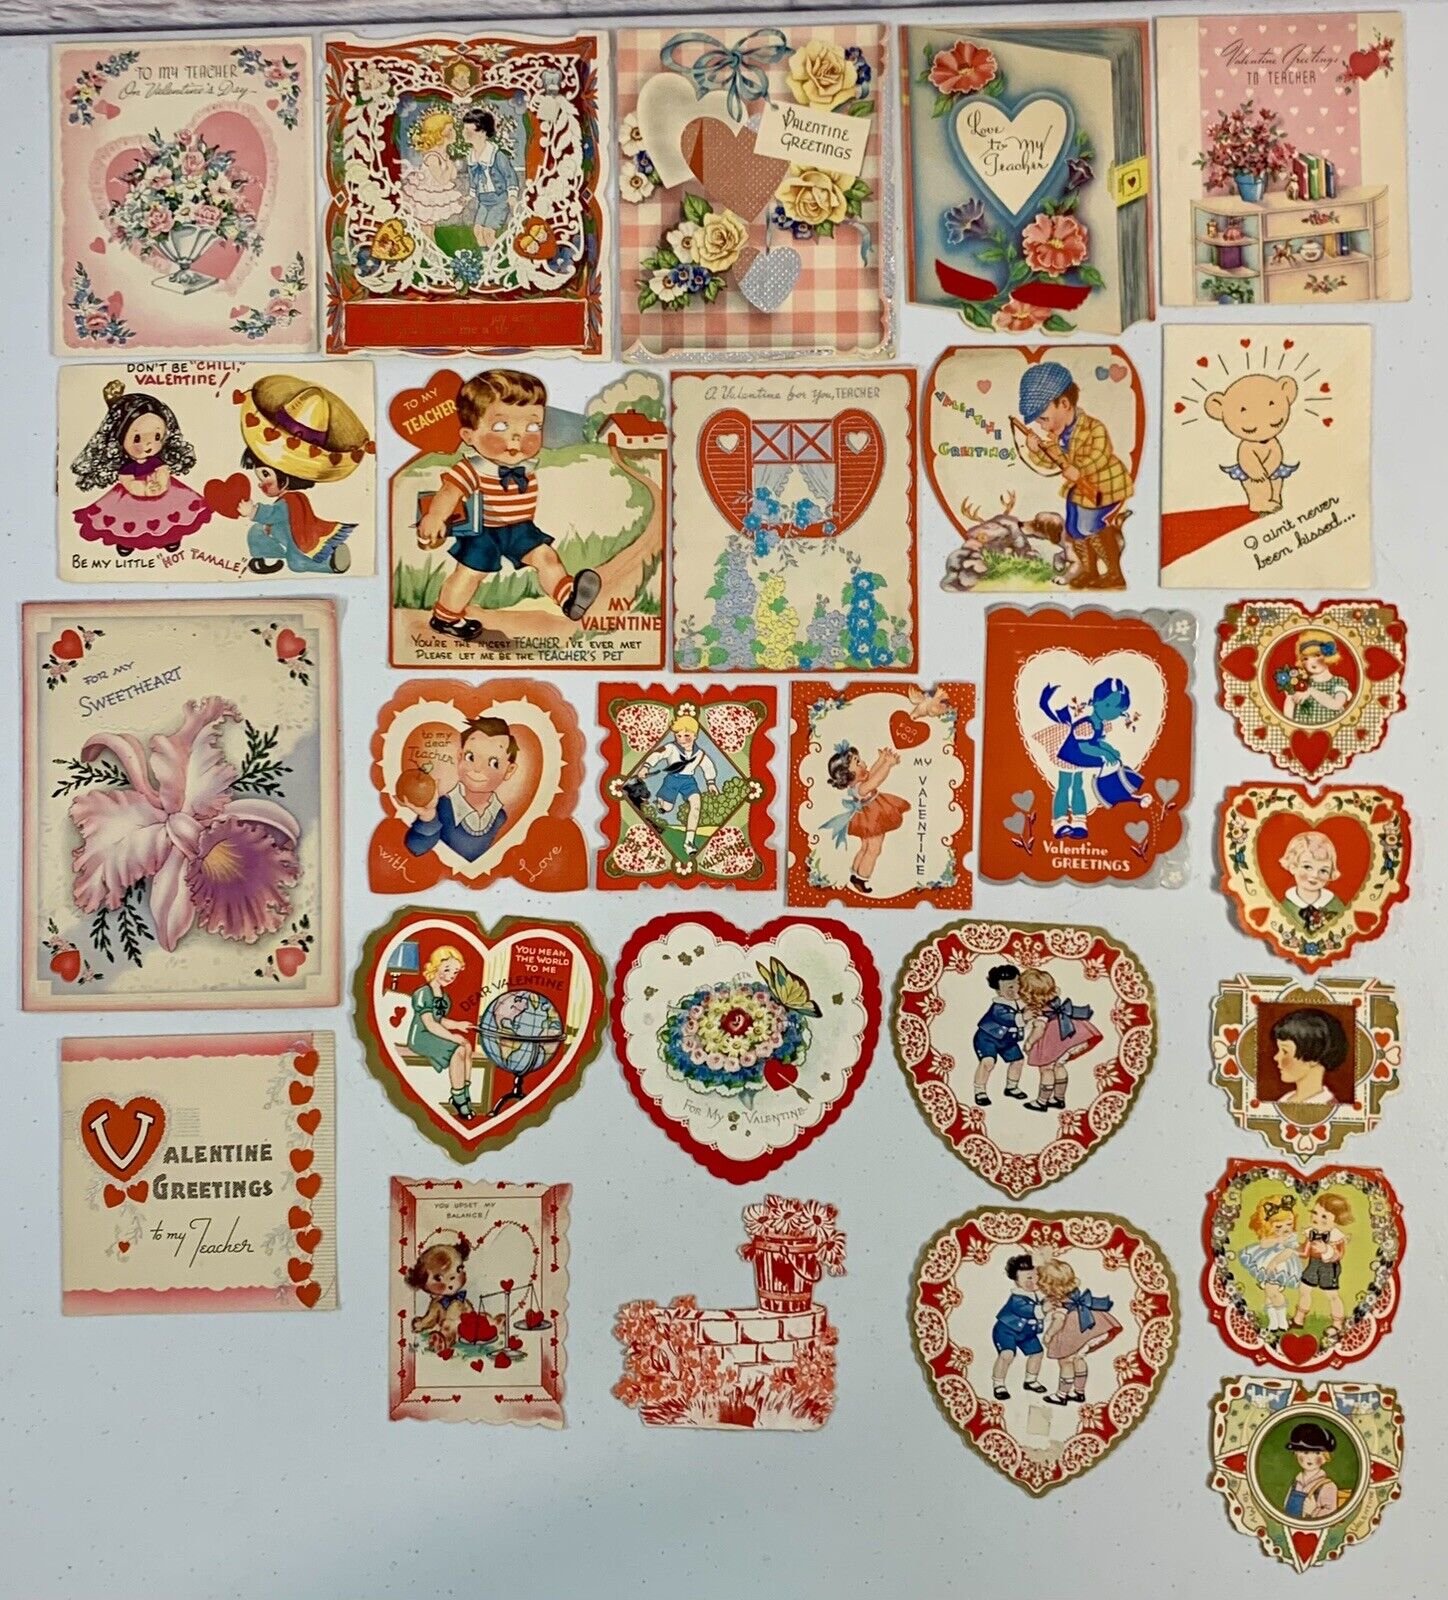 Huge Lot of 26 Vintage Valentine’s Day Cards 1920’s-1940’s Antique School